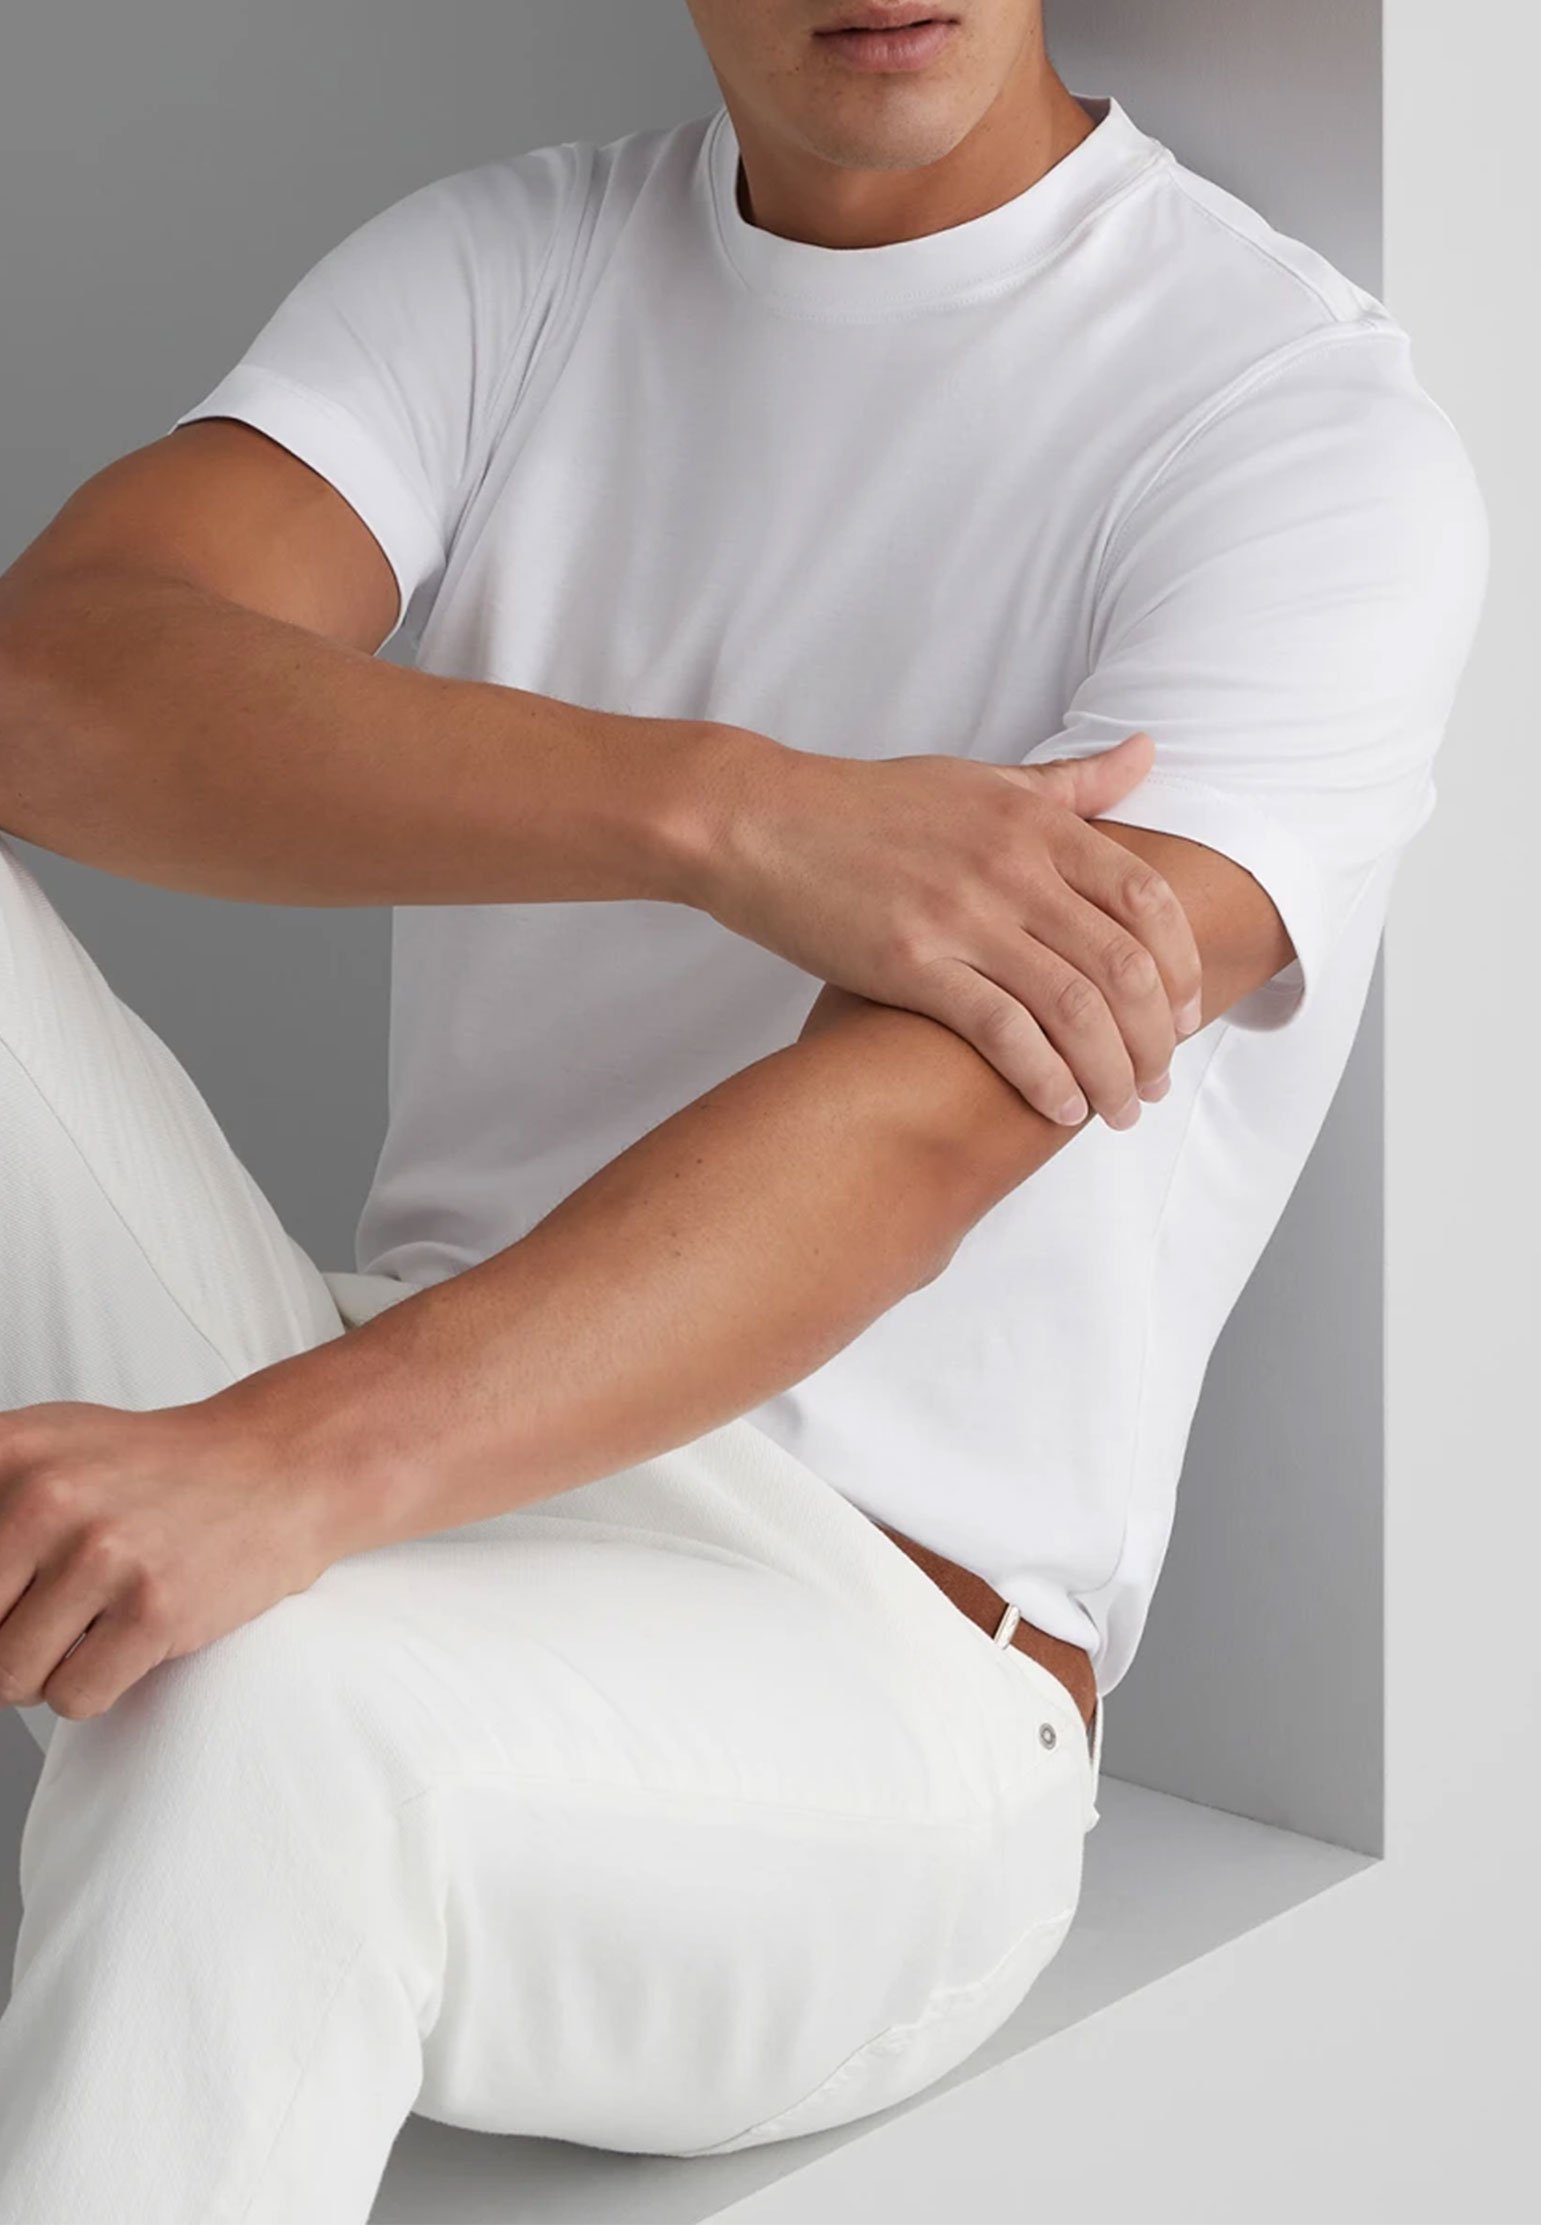 T-Shirt BRUNELLO CUCINELLI Color: white (Code: 3472) in online store Allure